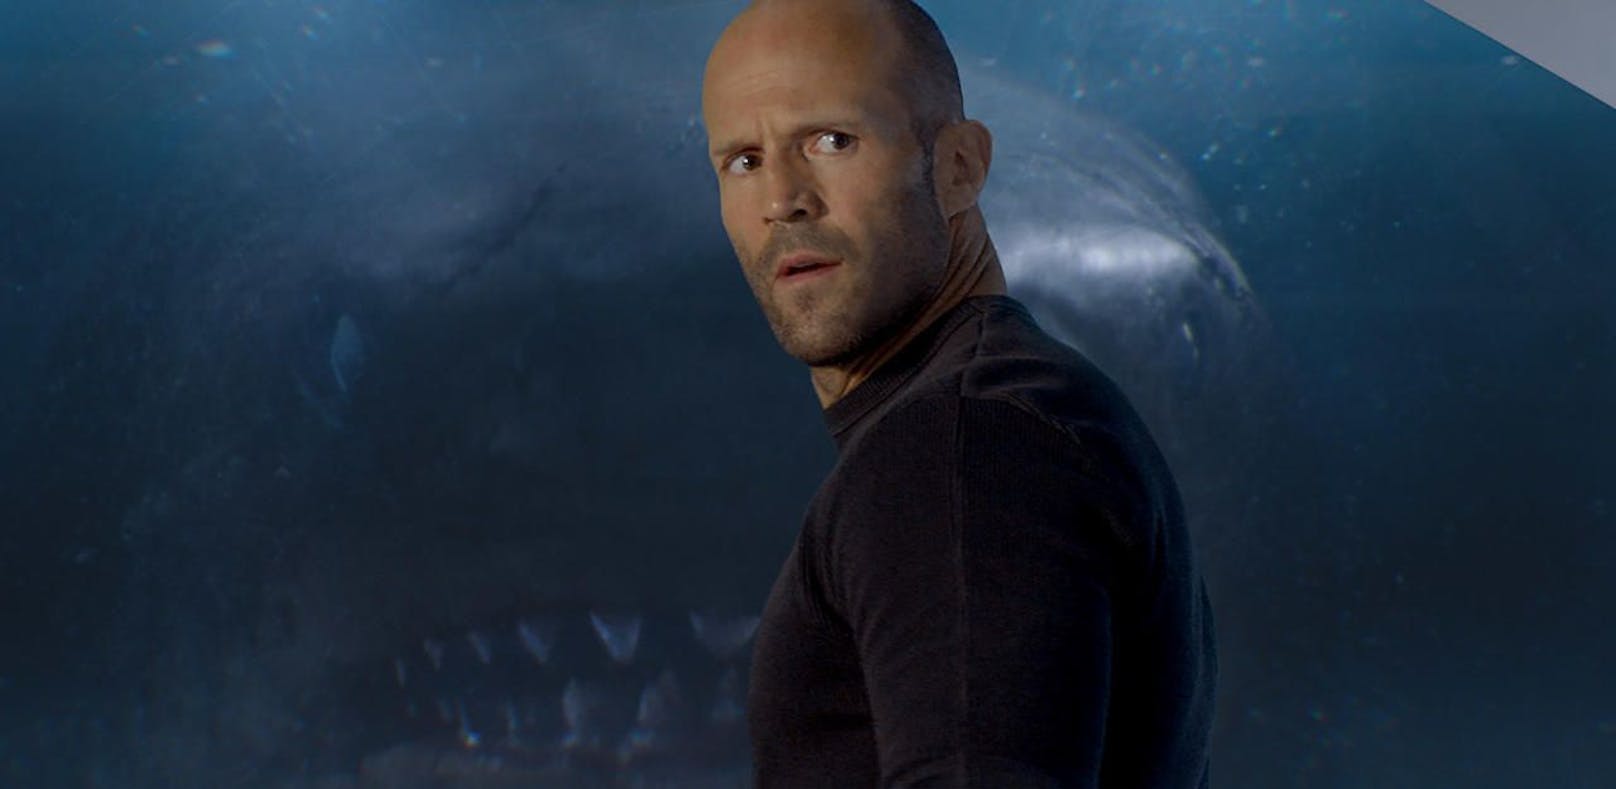 Neuer Teaser Trailer zum Hai-Schocker "The Meg"